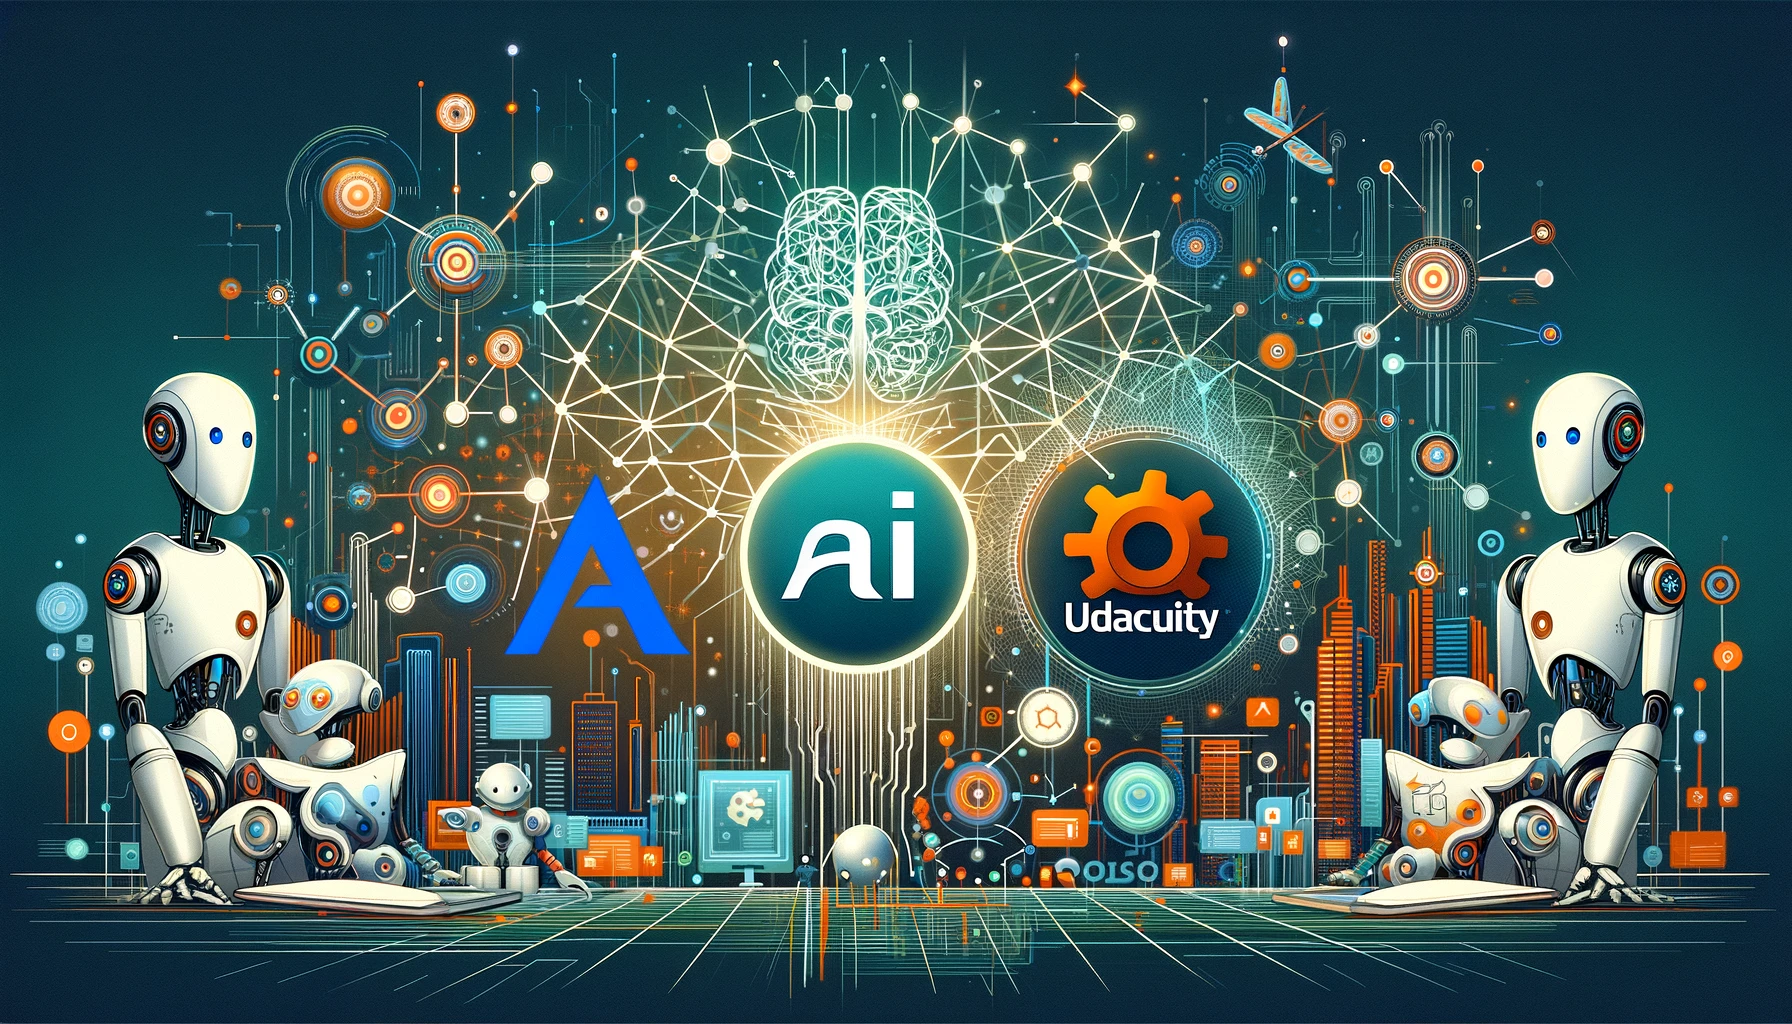 Accenture Udacity acquisition AI